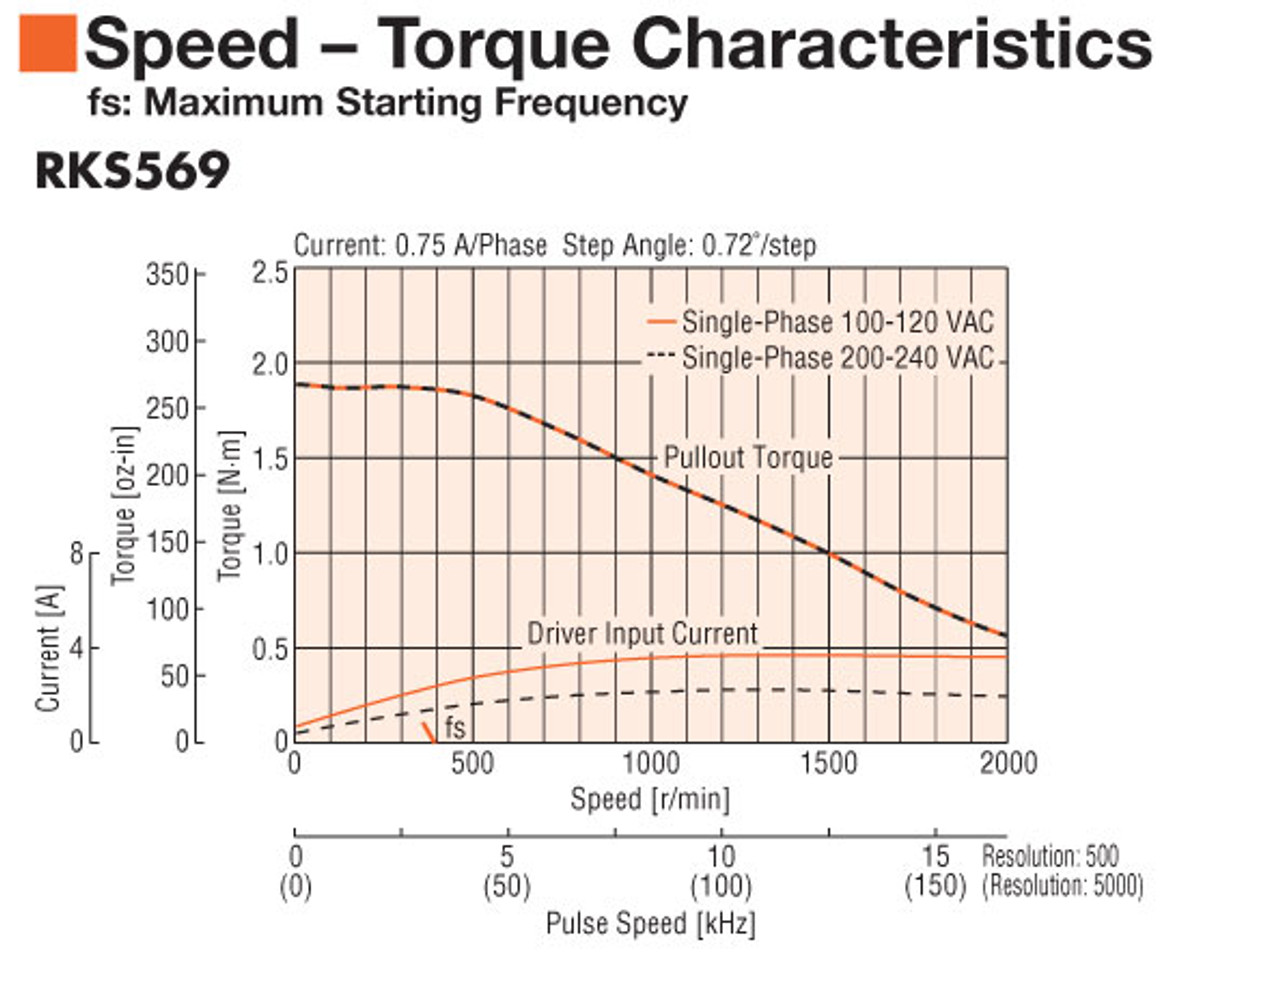 PKE569MC - Speed-Torque